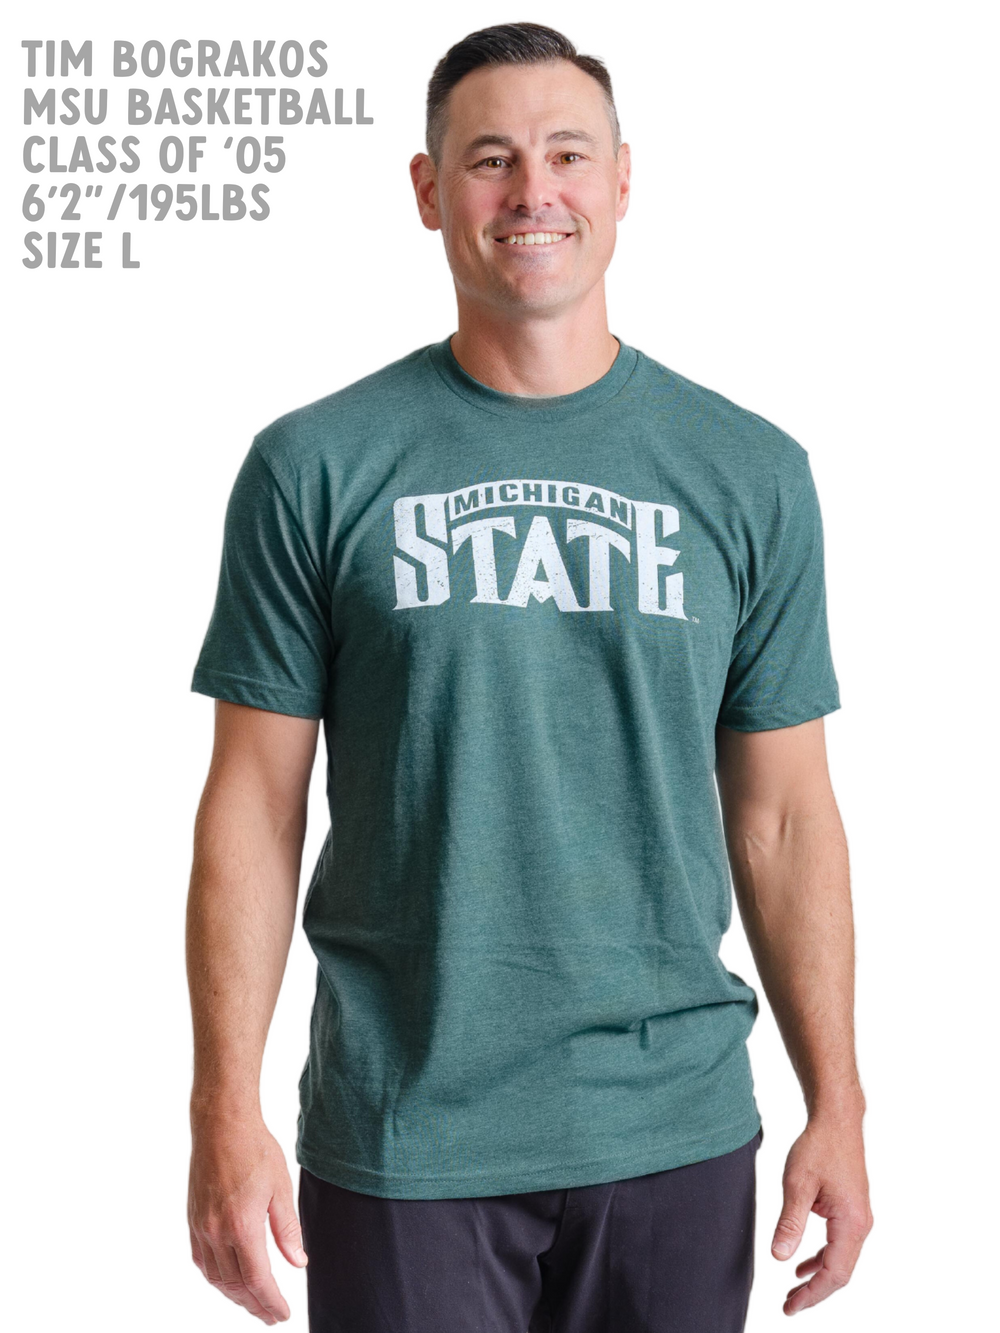 Michigan State University Spartans 2000 National Championship Basketball Jersey Design T-shirt